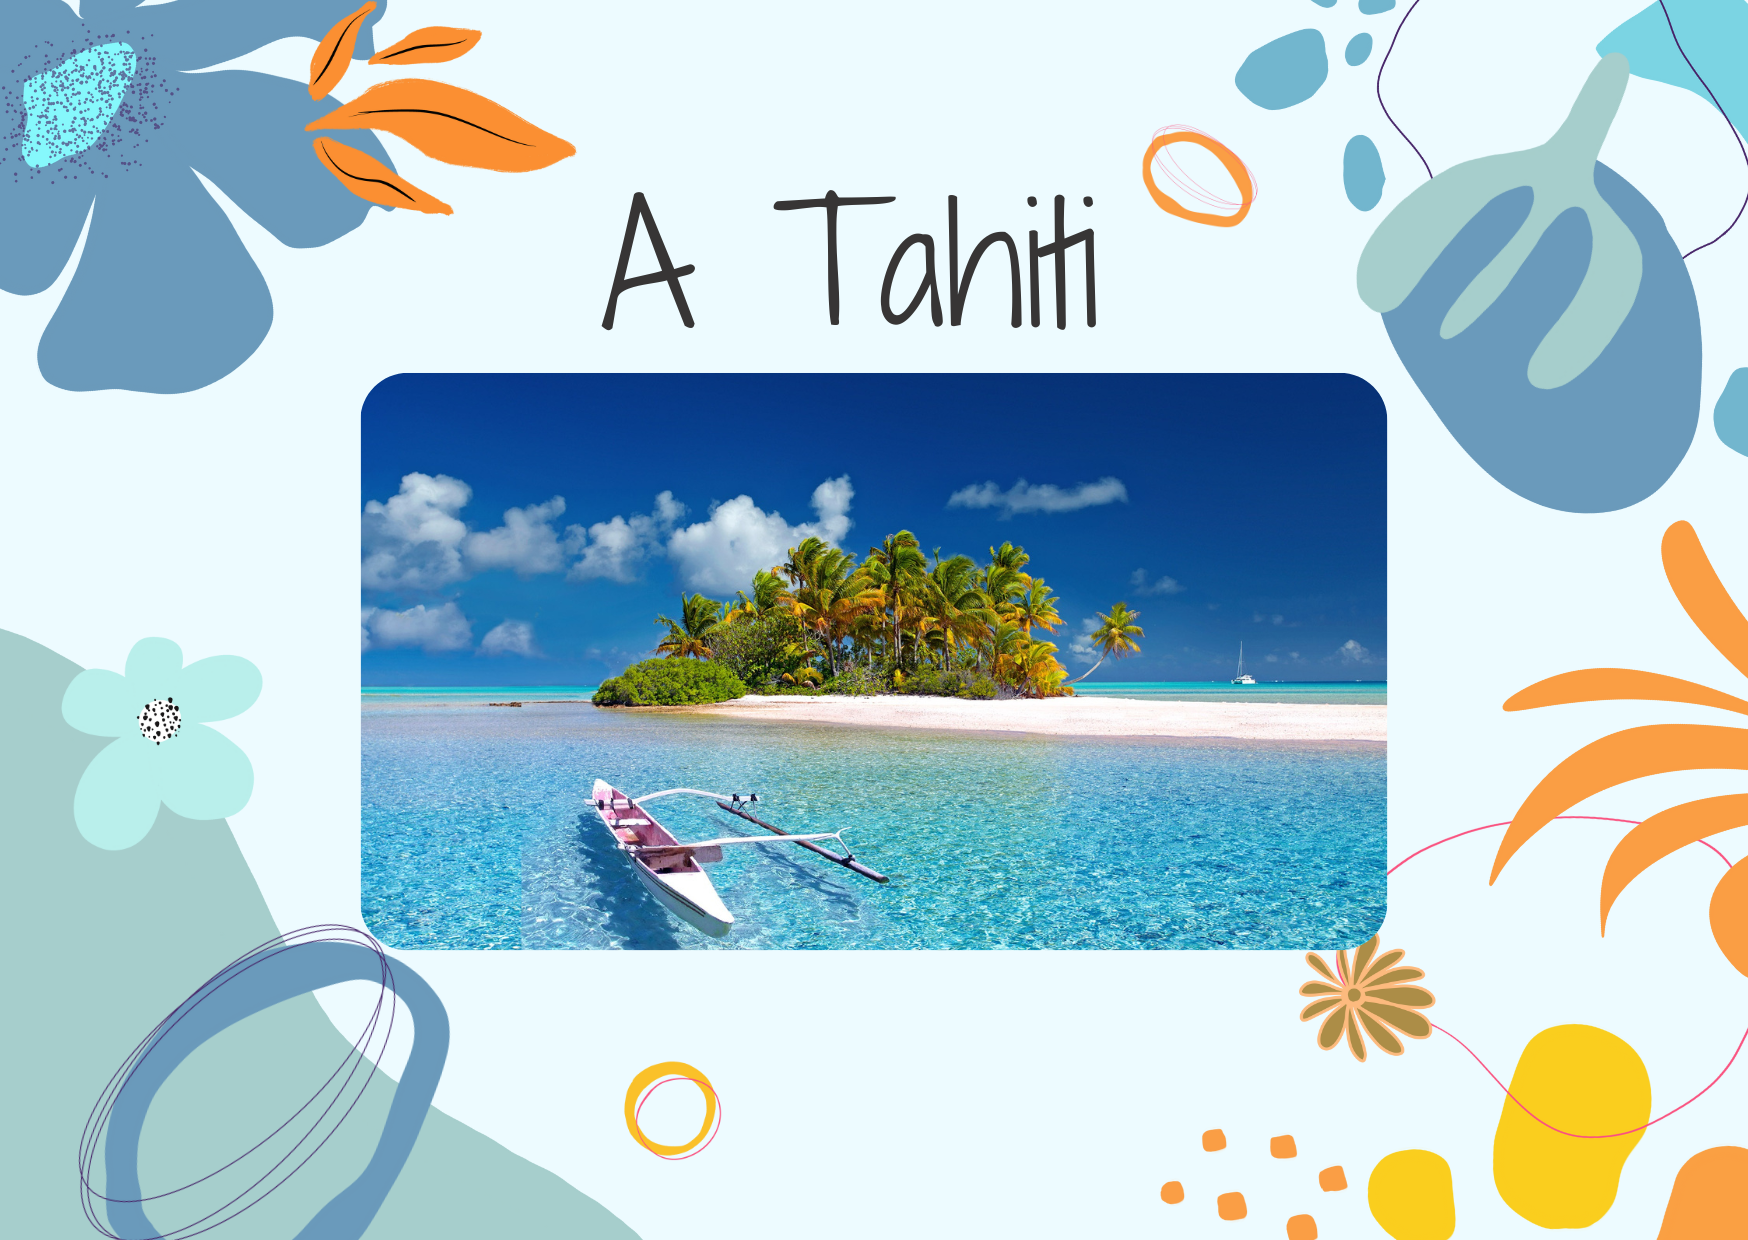 Nouvel an à tahiti traditions